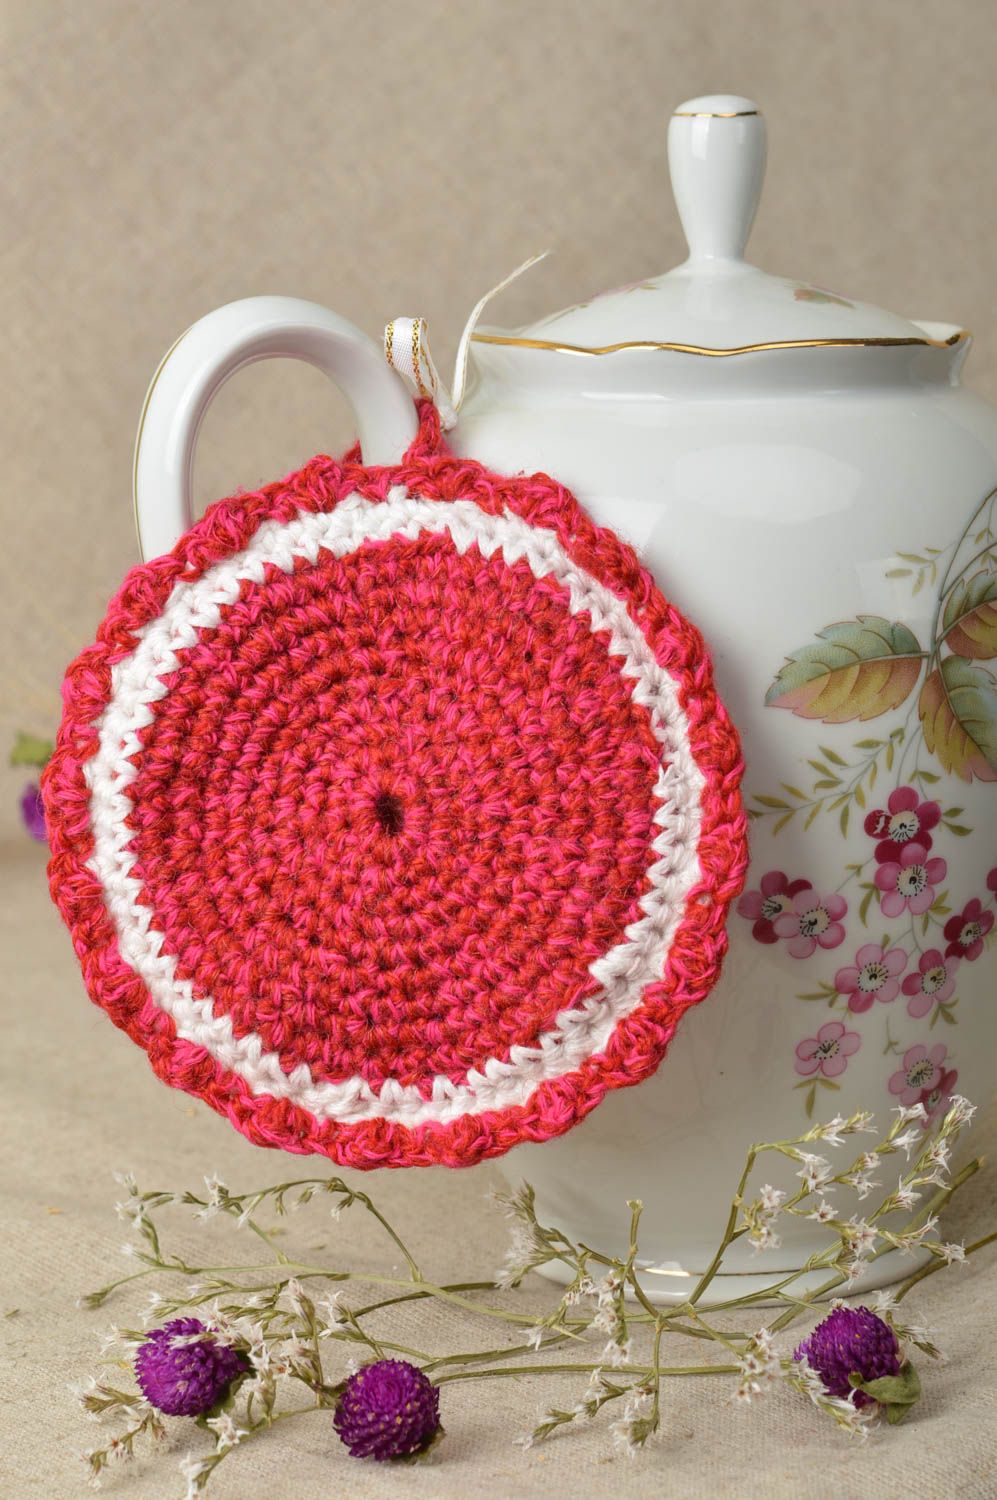 Stylish handmade crochet potholder pot holder design home textiles gift ideas photo 1